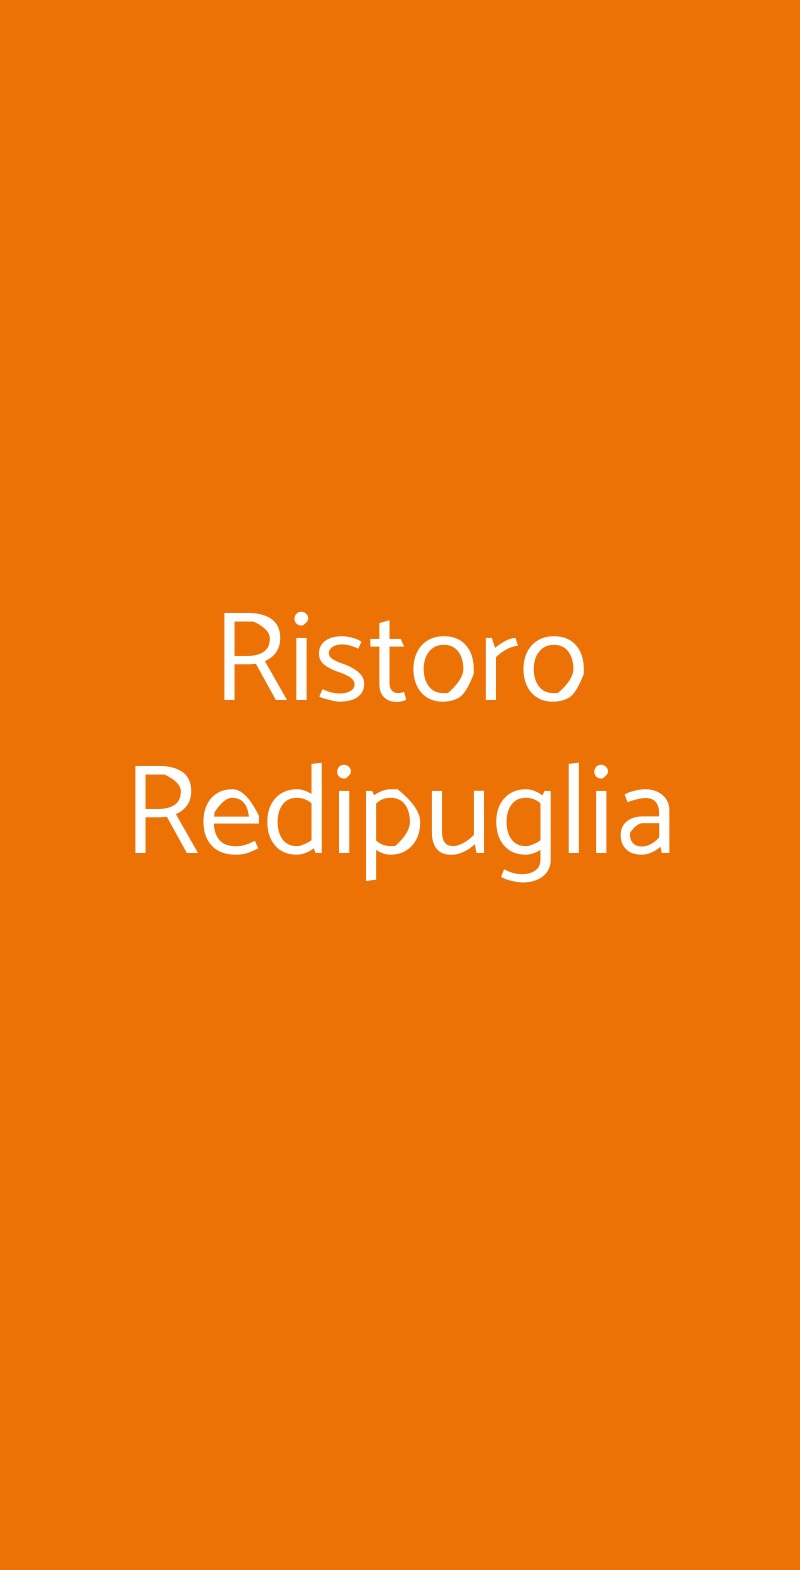 Ristoro Redipuglia Pisa menù 1 pagina